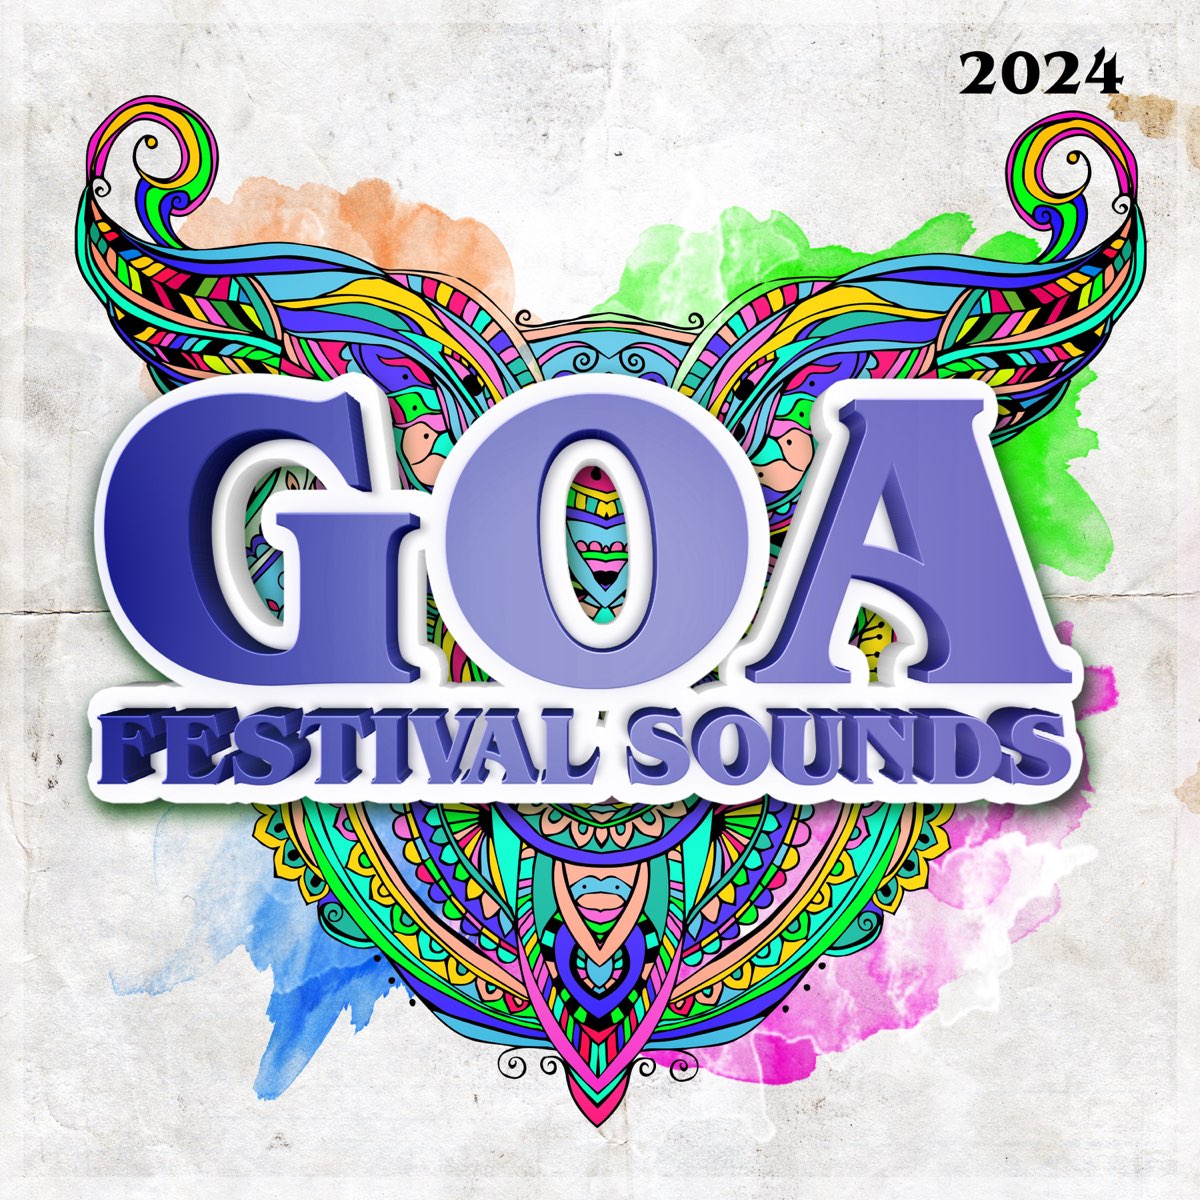 Goa Festival Sounds 2024 - Album by Various Artists - Apple Music